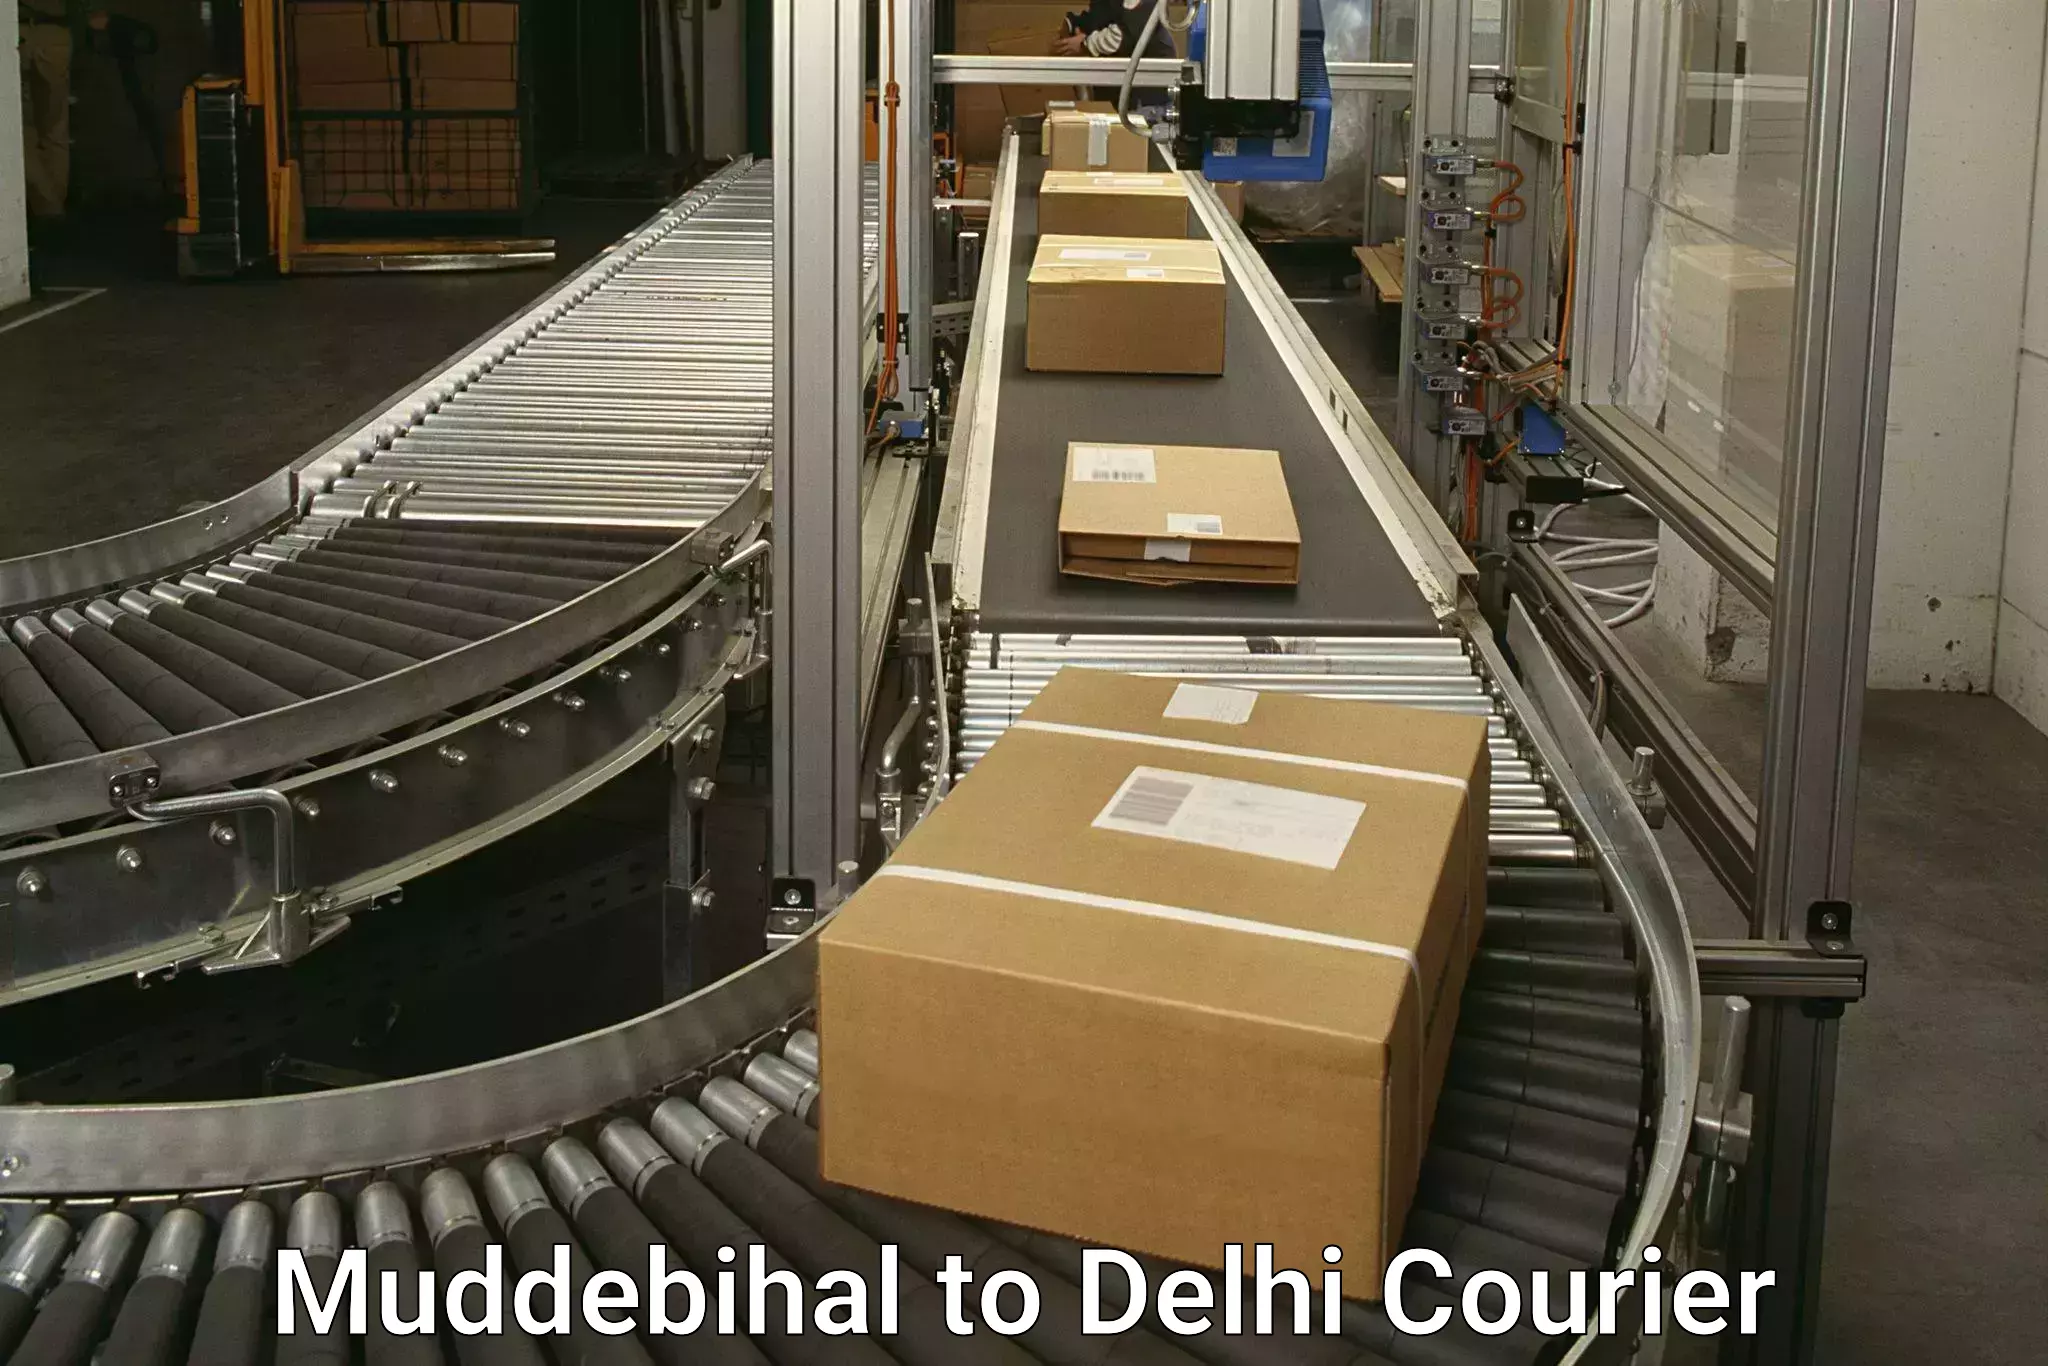 Express package handling Muddebihal to NCR